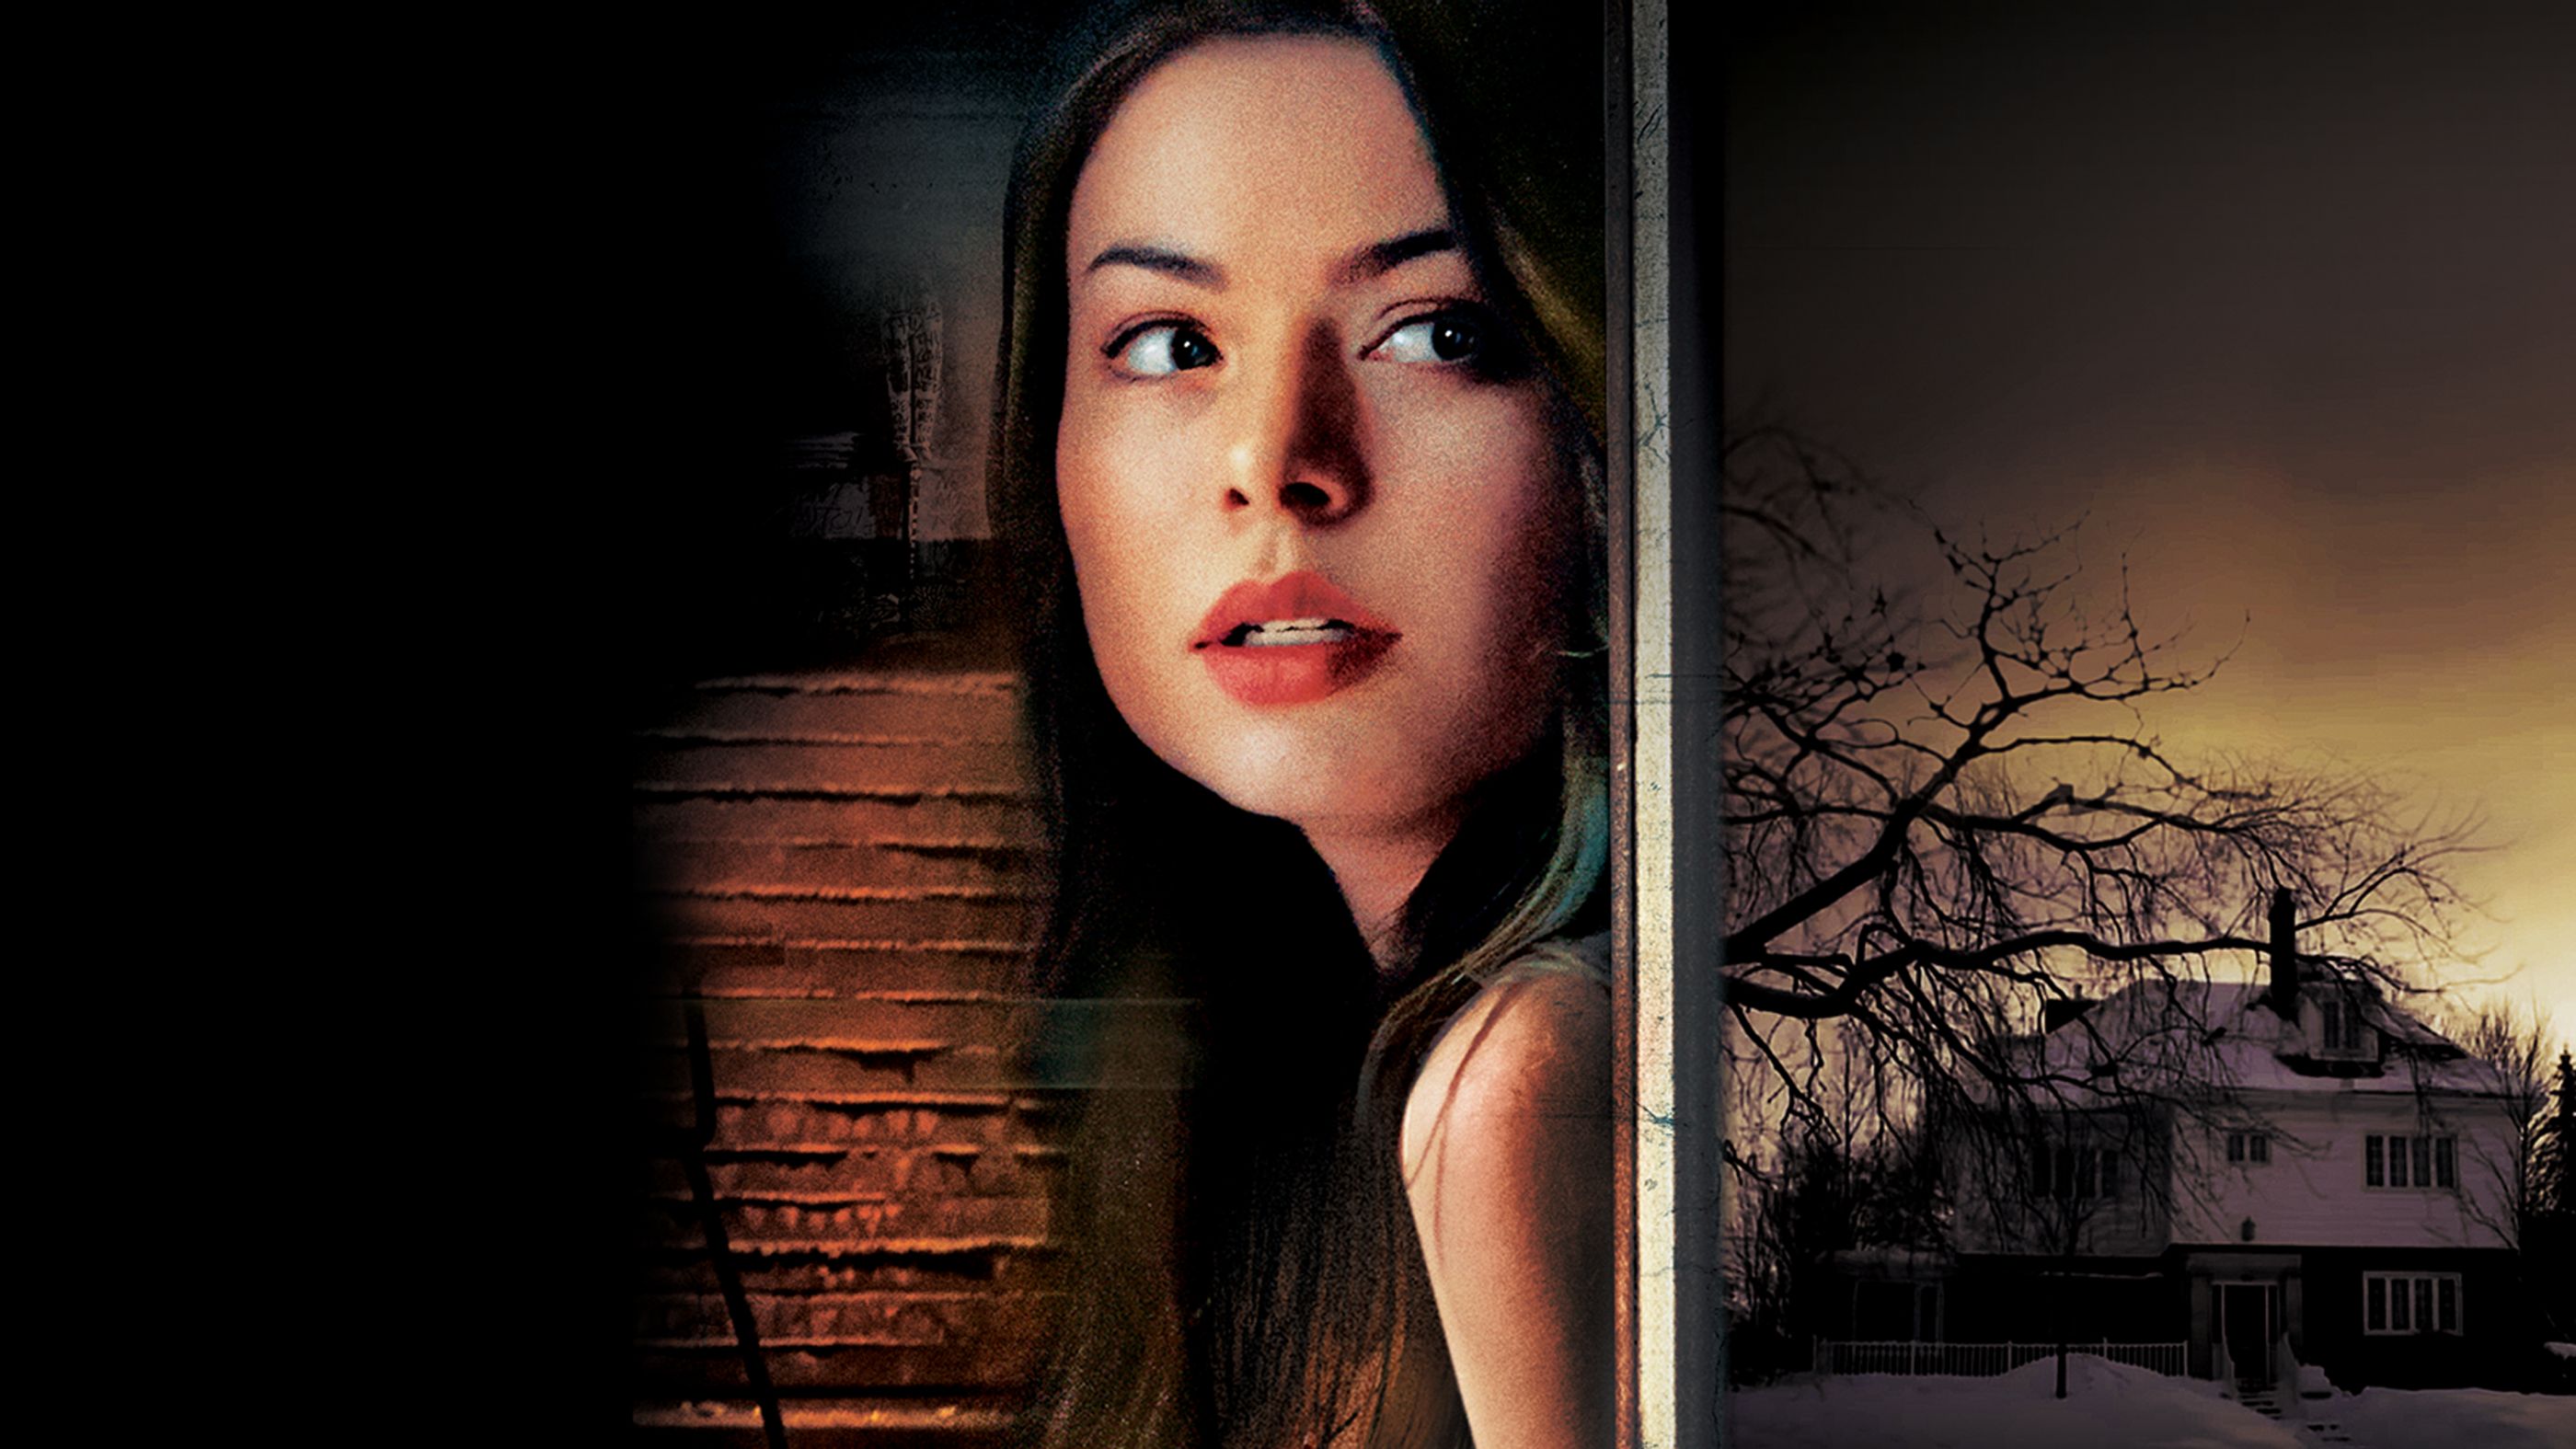 The Intruders Official Trailer #1 (2015) - Miranda Cosgrove Movie